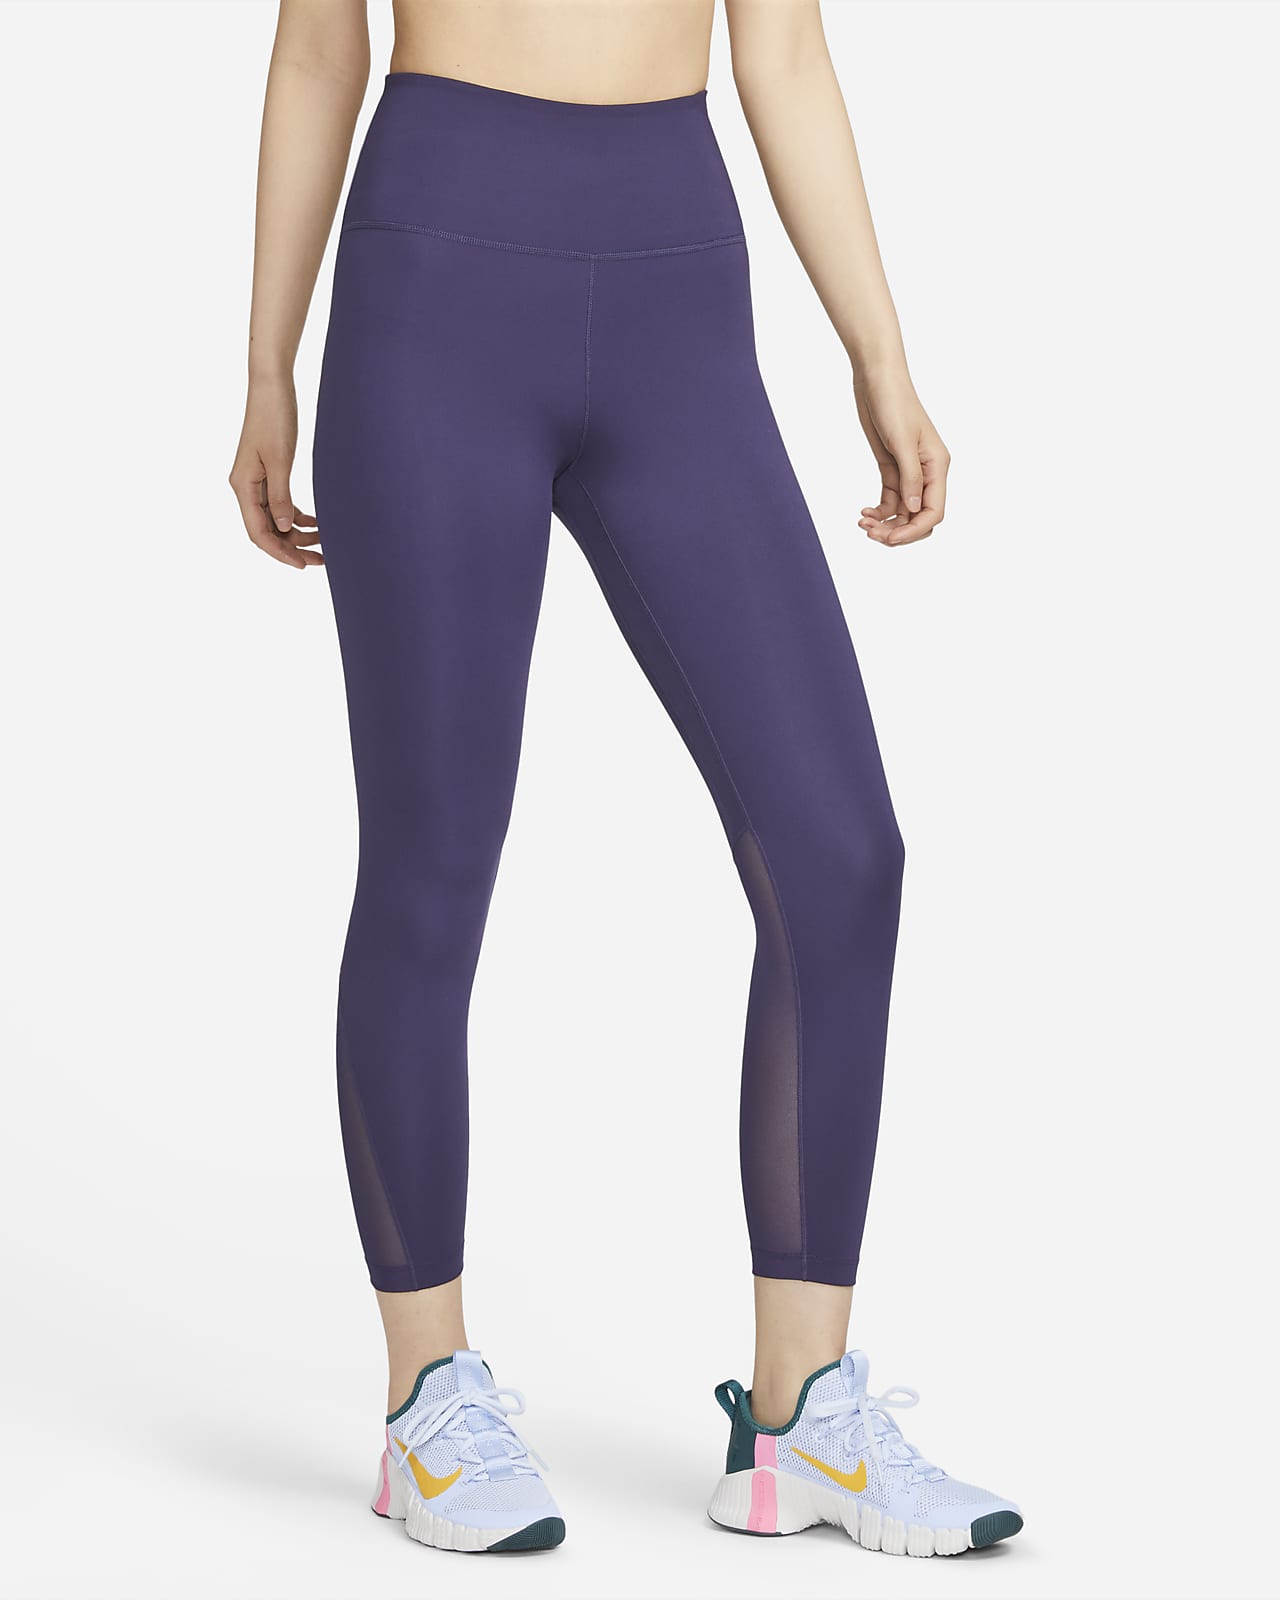 Women's high-waisted leggings Nike One Dri-FIT